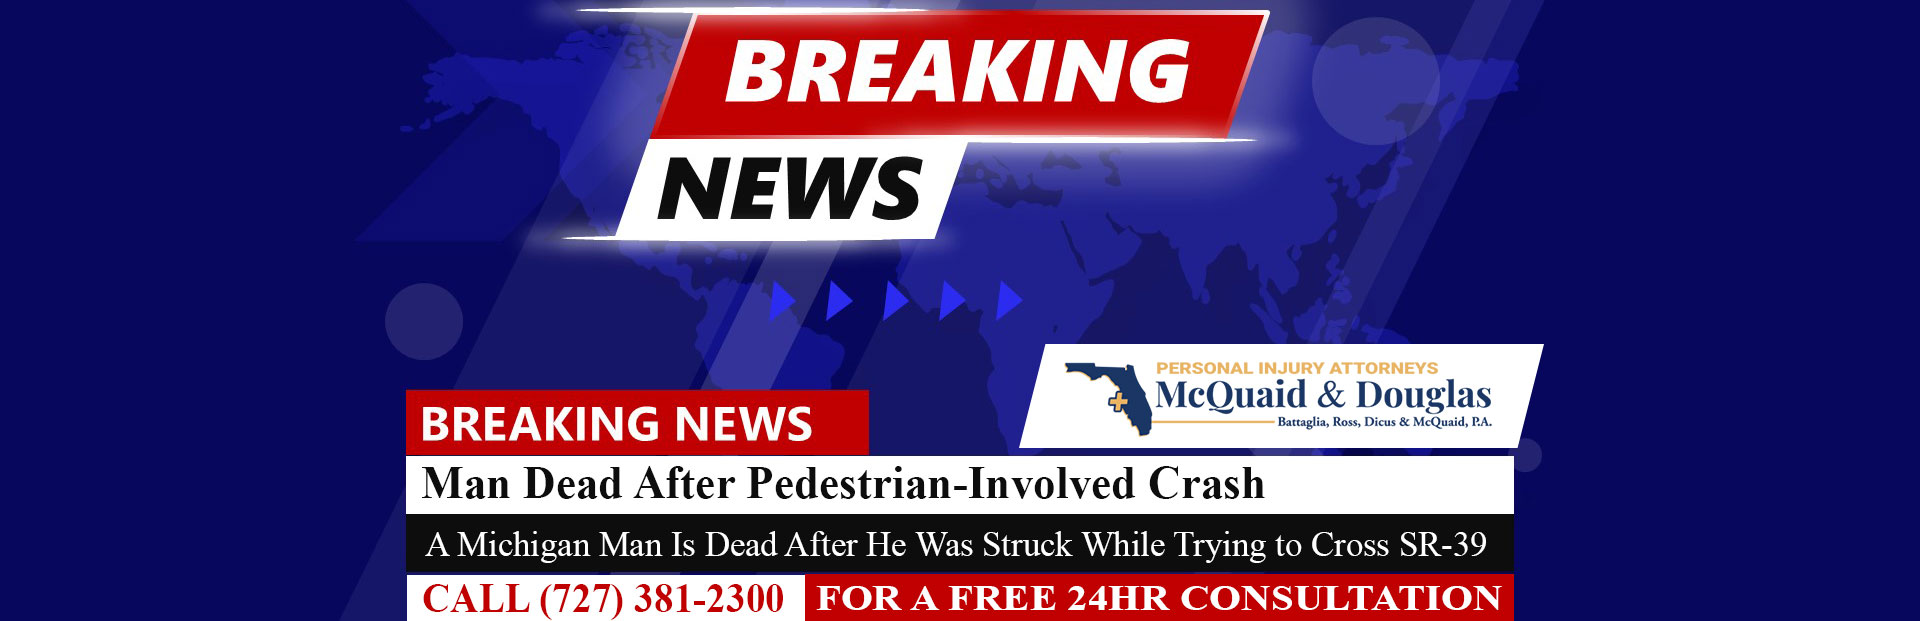 [01-10-24] Man Dead After Pedestrian-Involved Crash in Hillsborough County